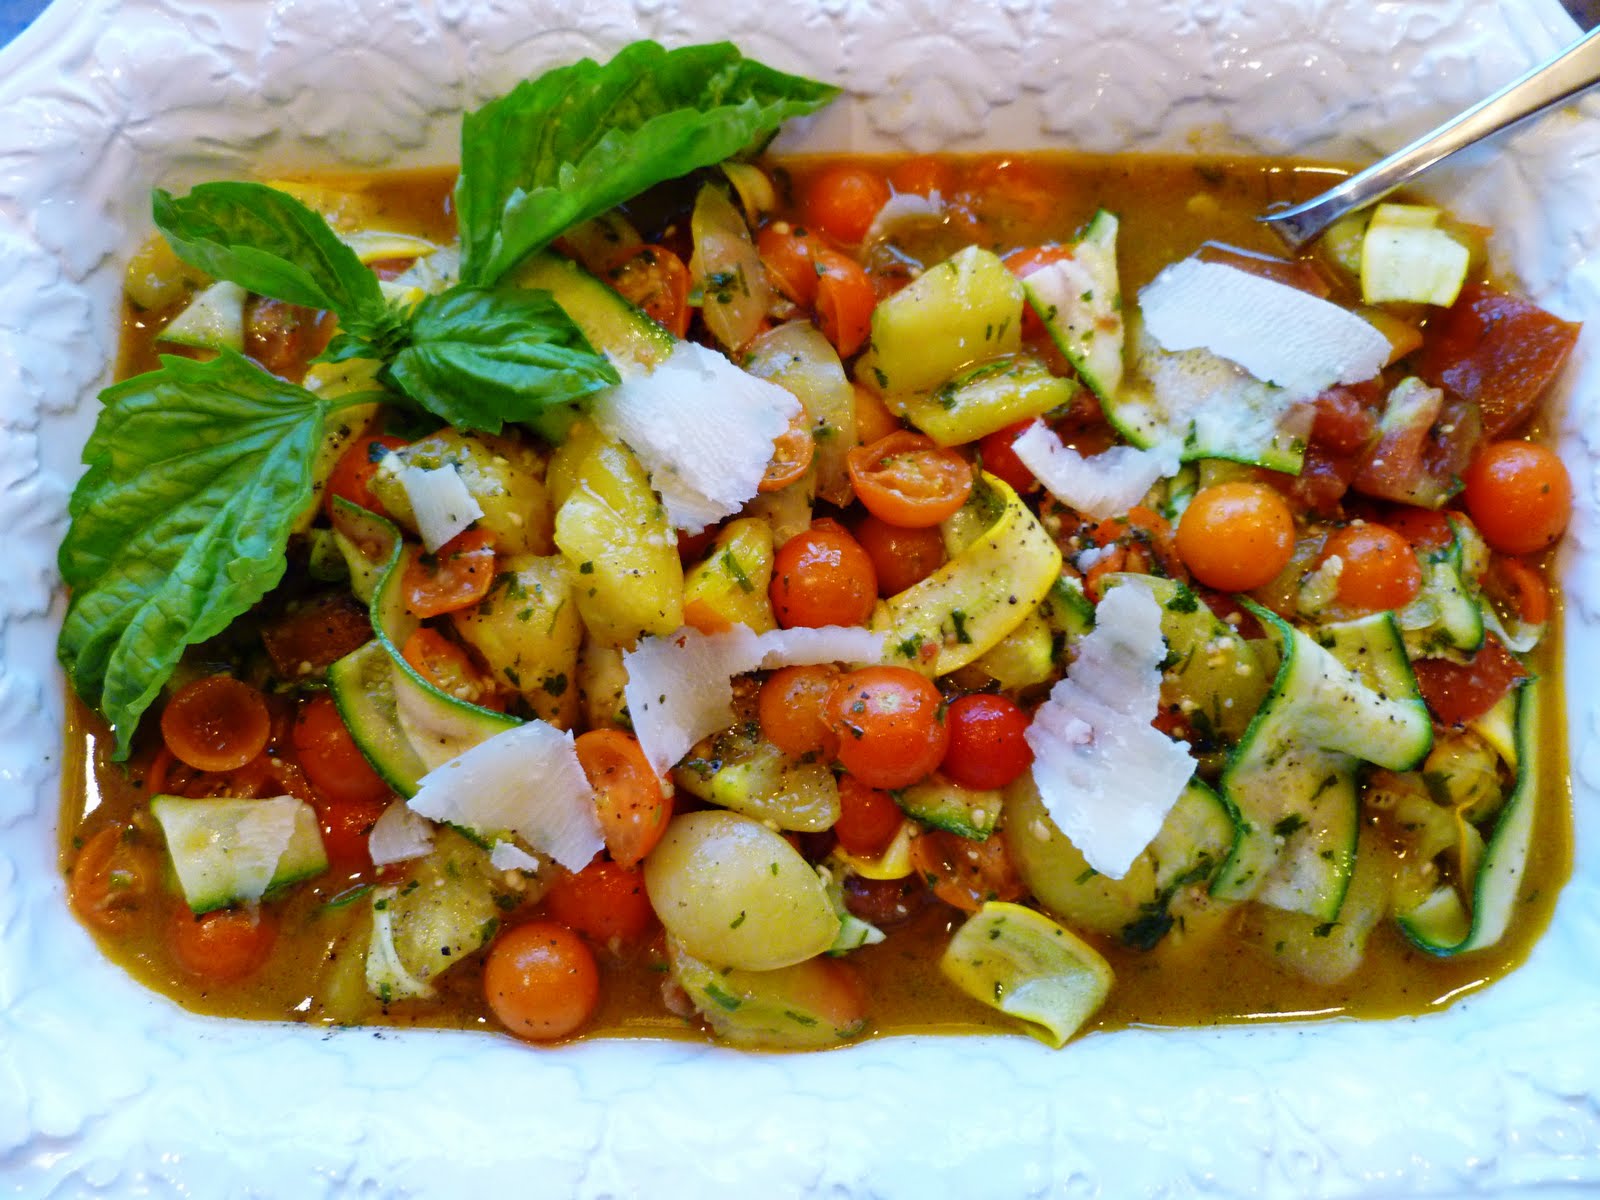 City Home/Country Home: Tomato Zucchini Salad with Vinaigrette